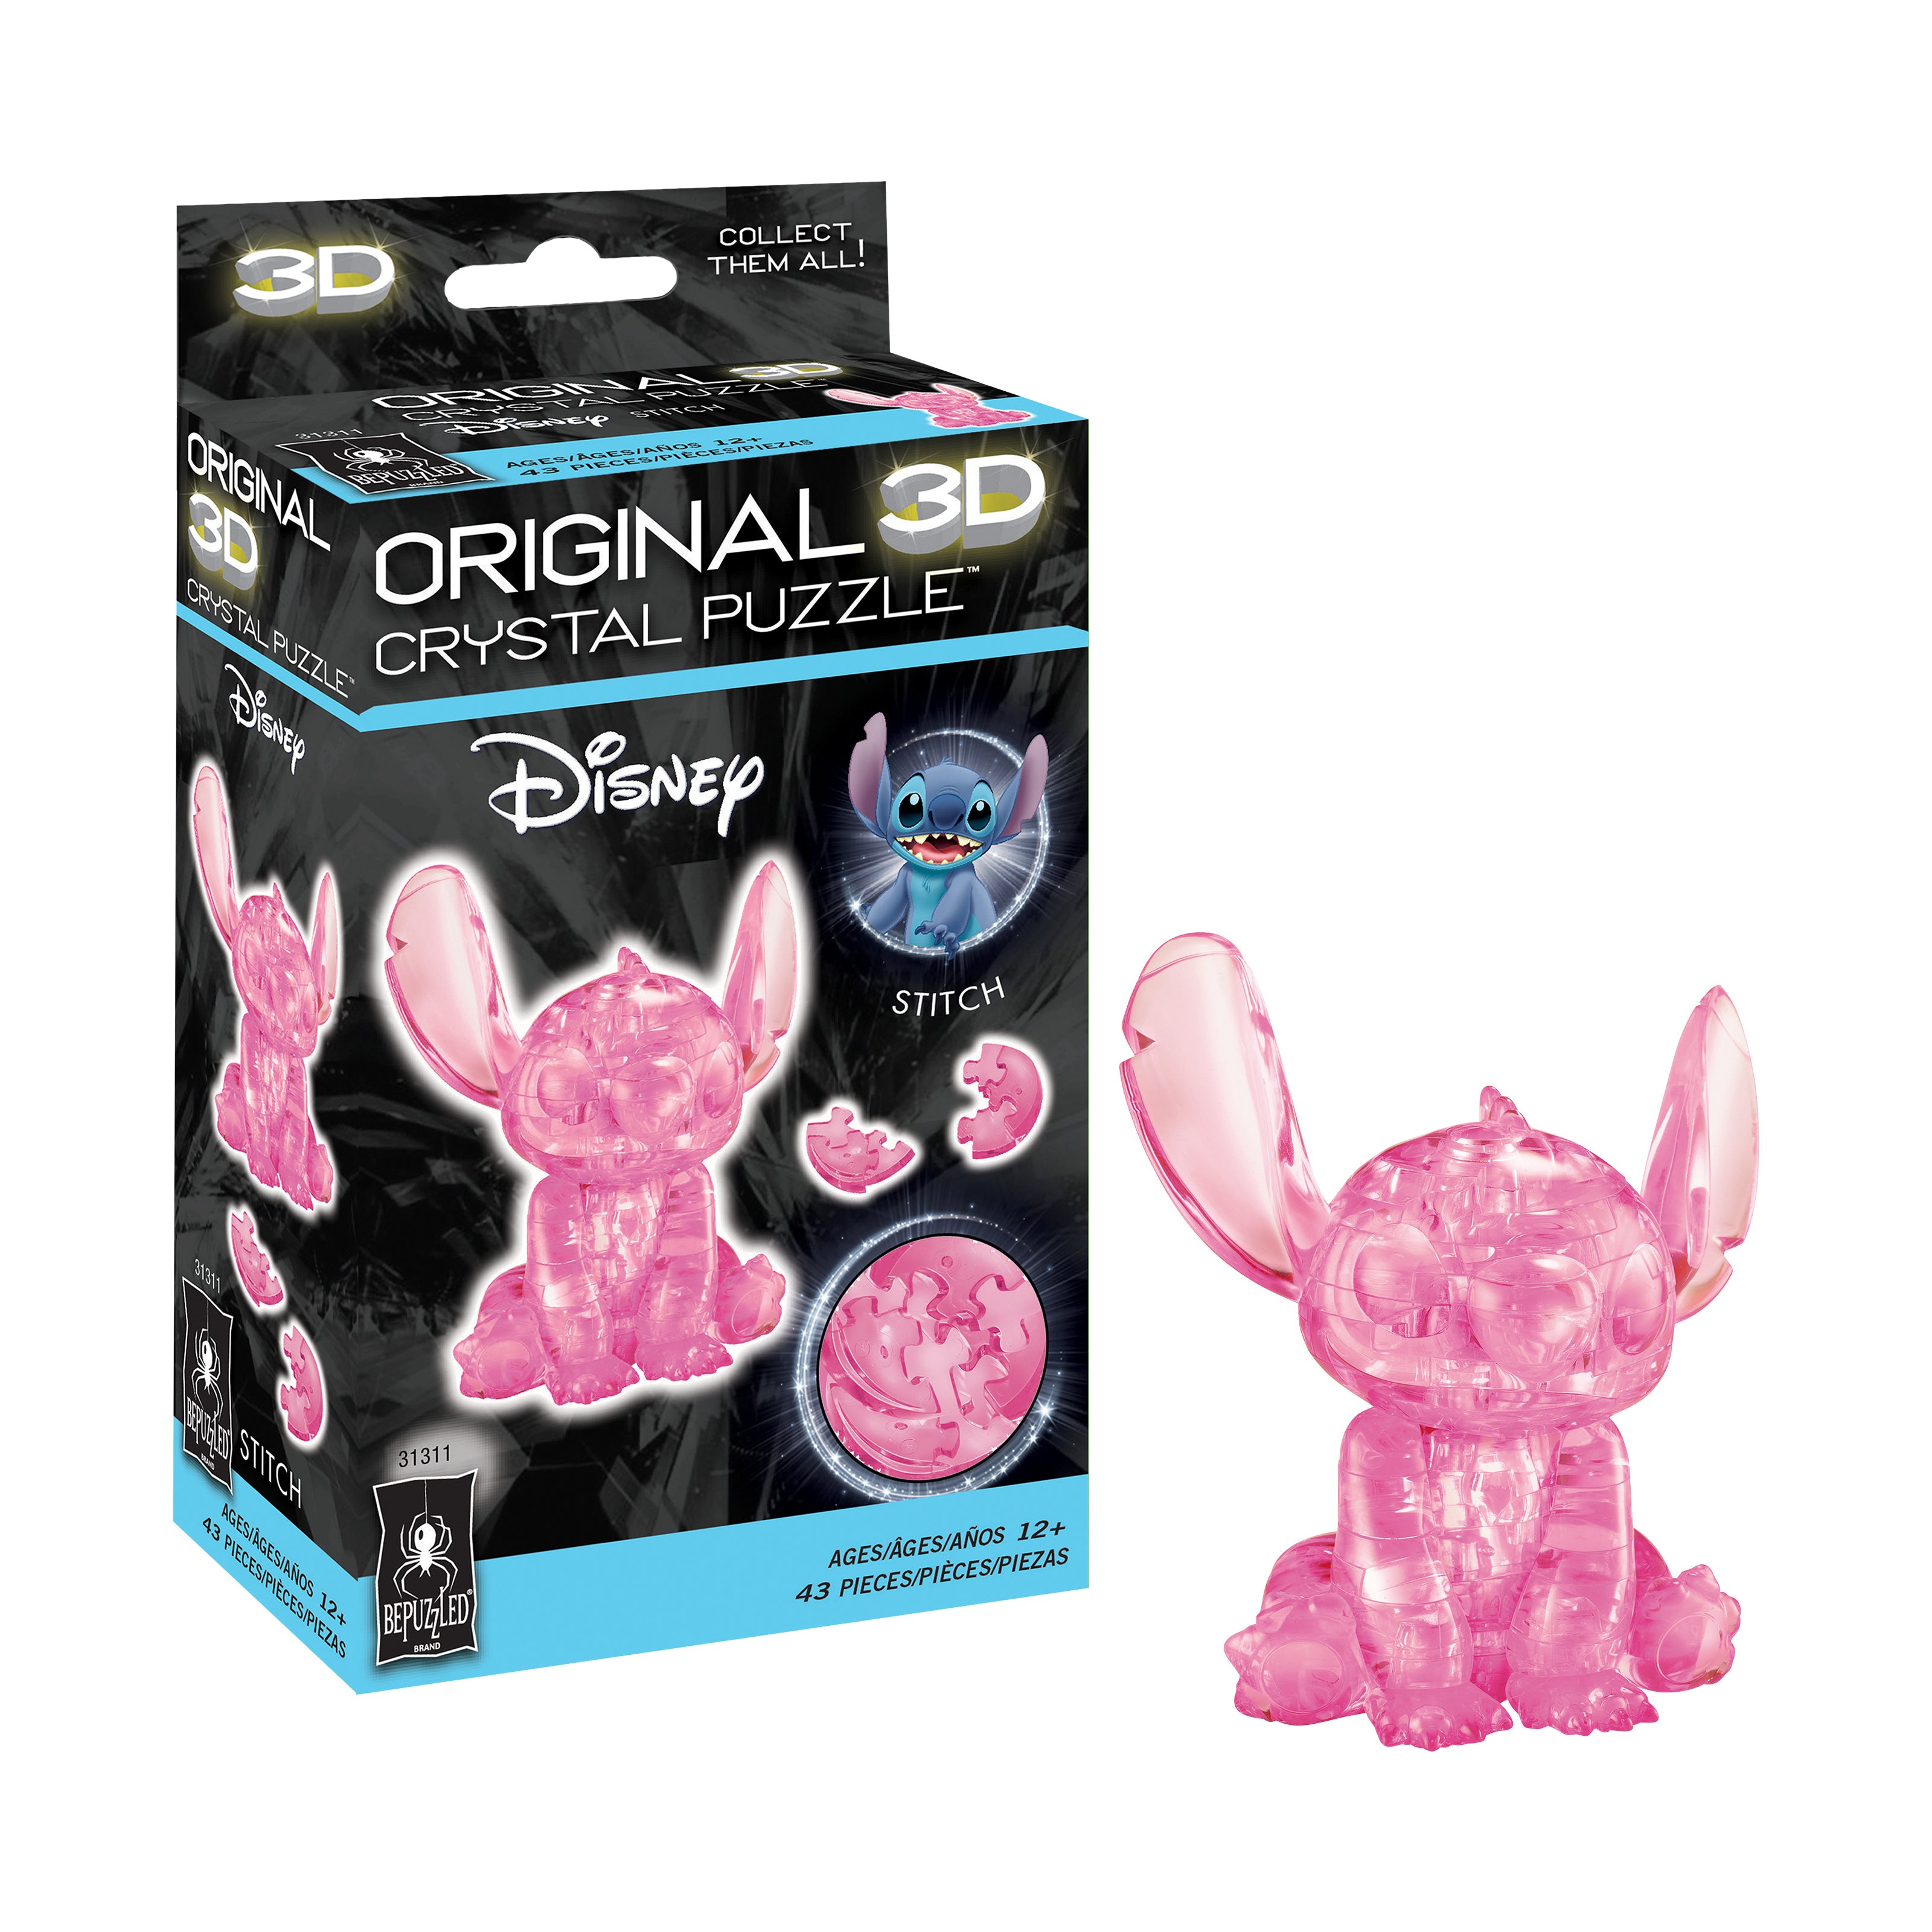 3D Crystal Puzzle - Disney Stitch (Pink): 43 Pcs